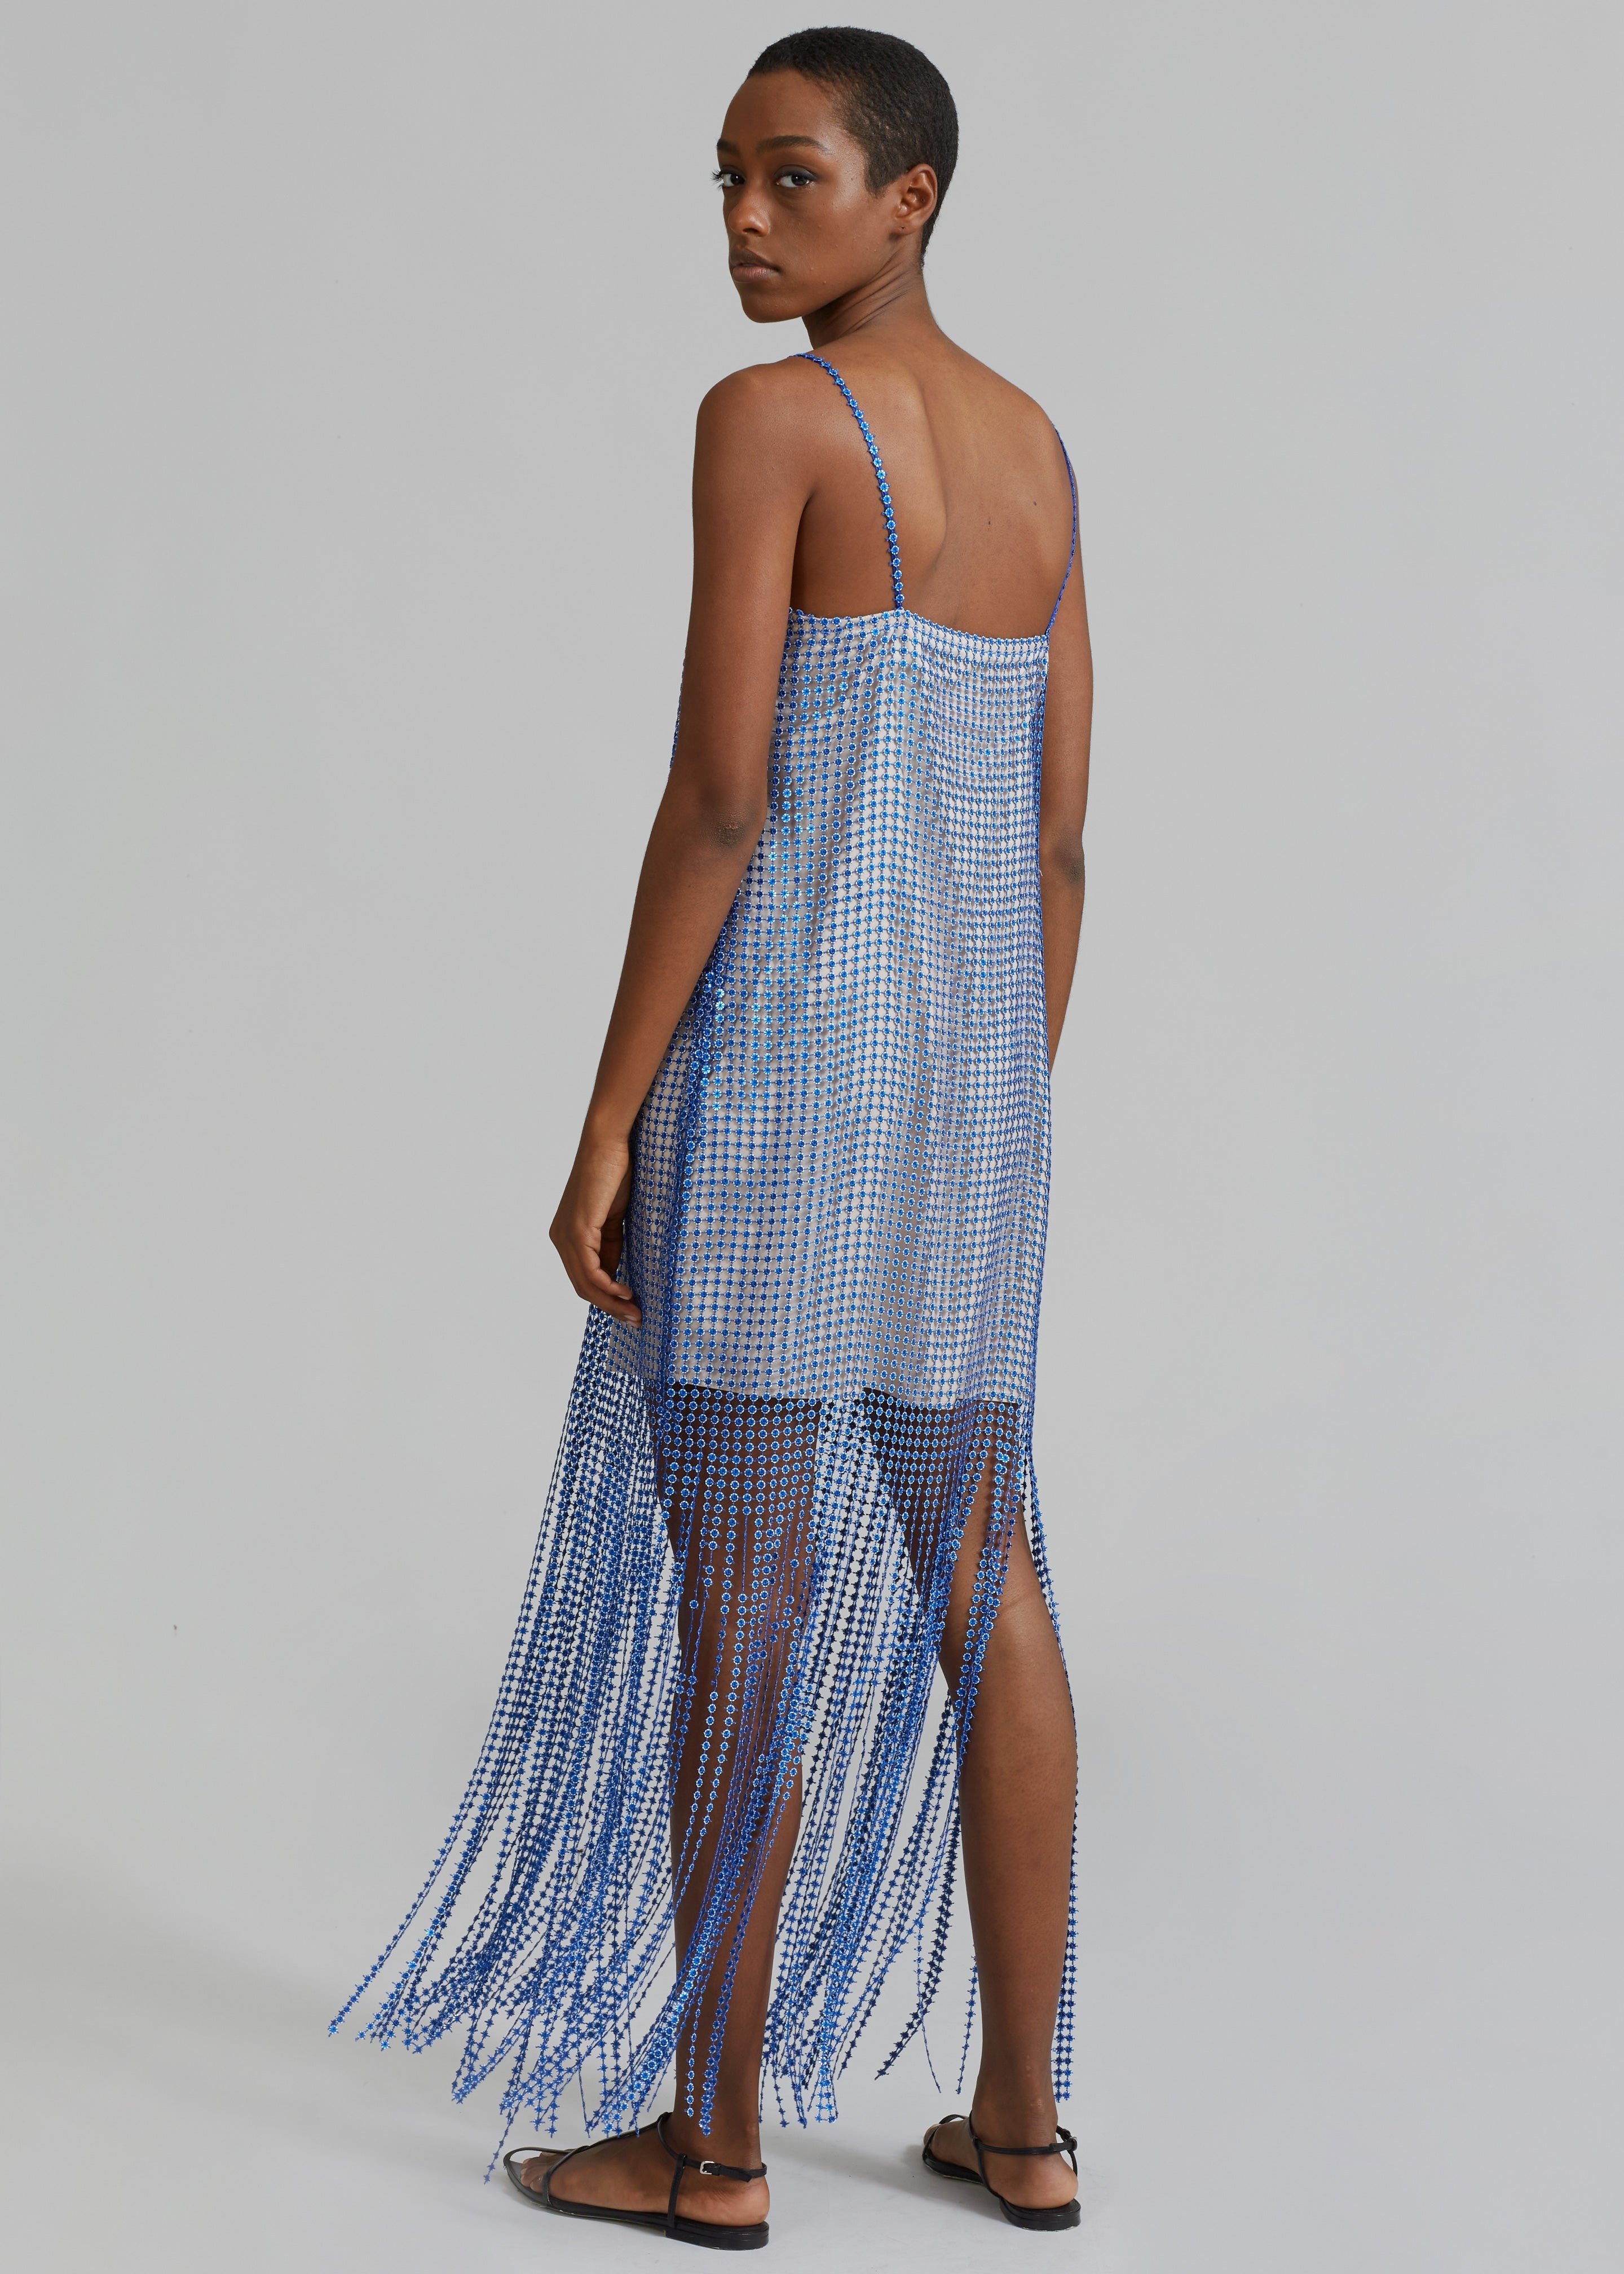 REMAIN Sequin Lace Fringe Dress - Surf The Web Comb. - 10